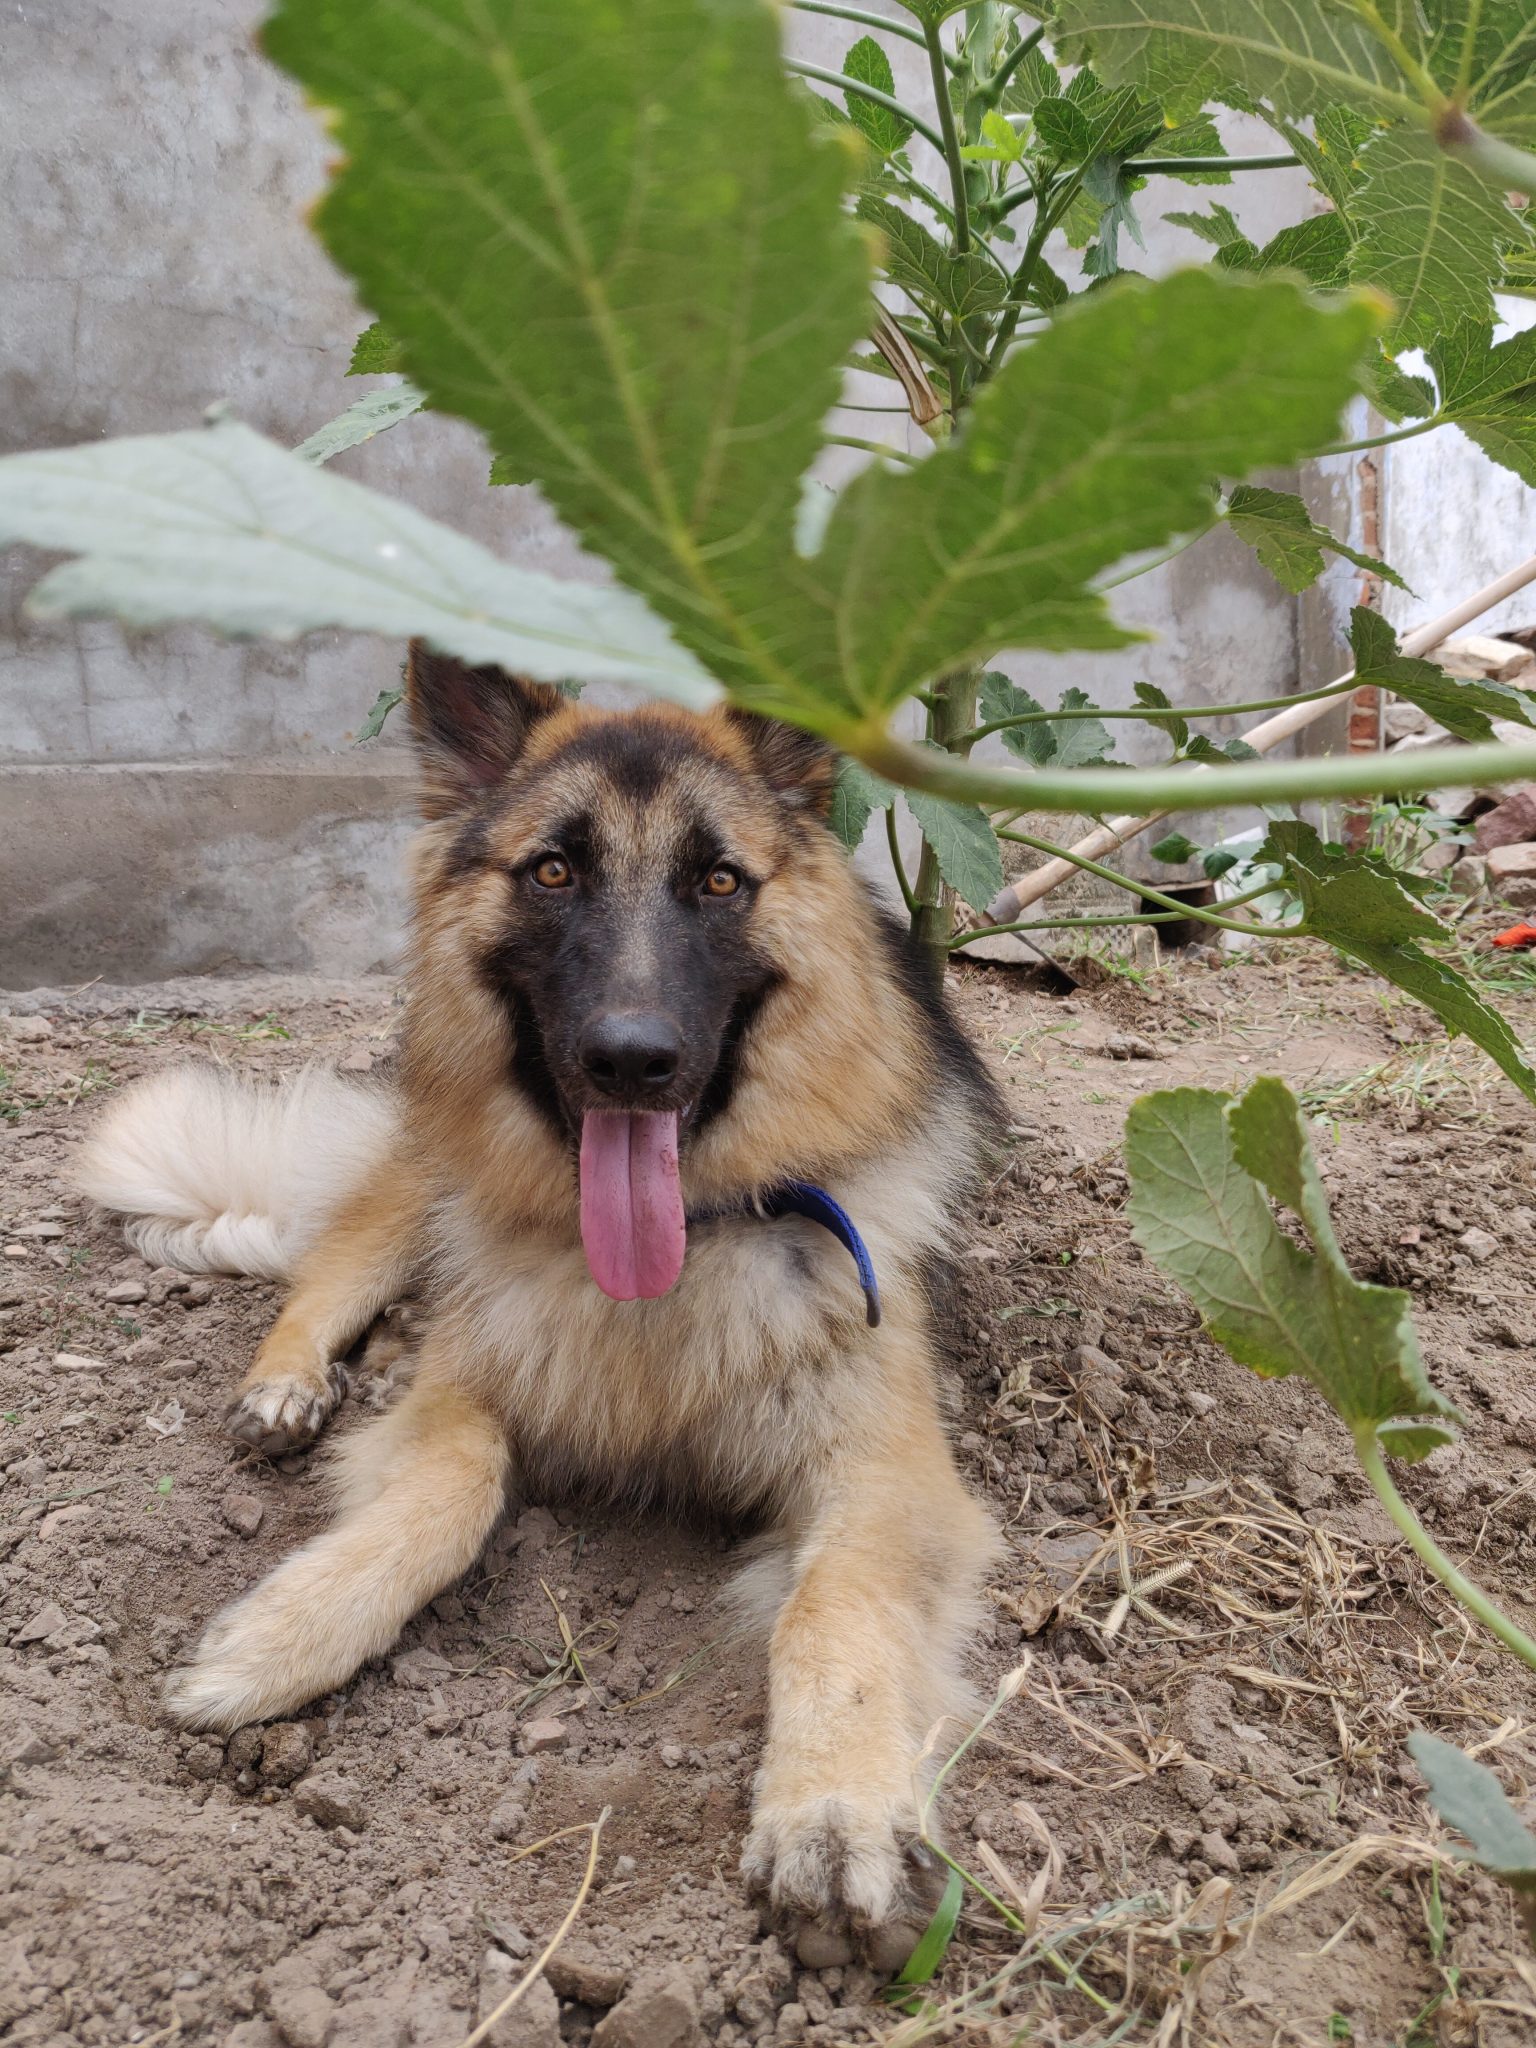 German Shepherd dog resting under green plant